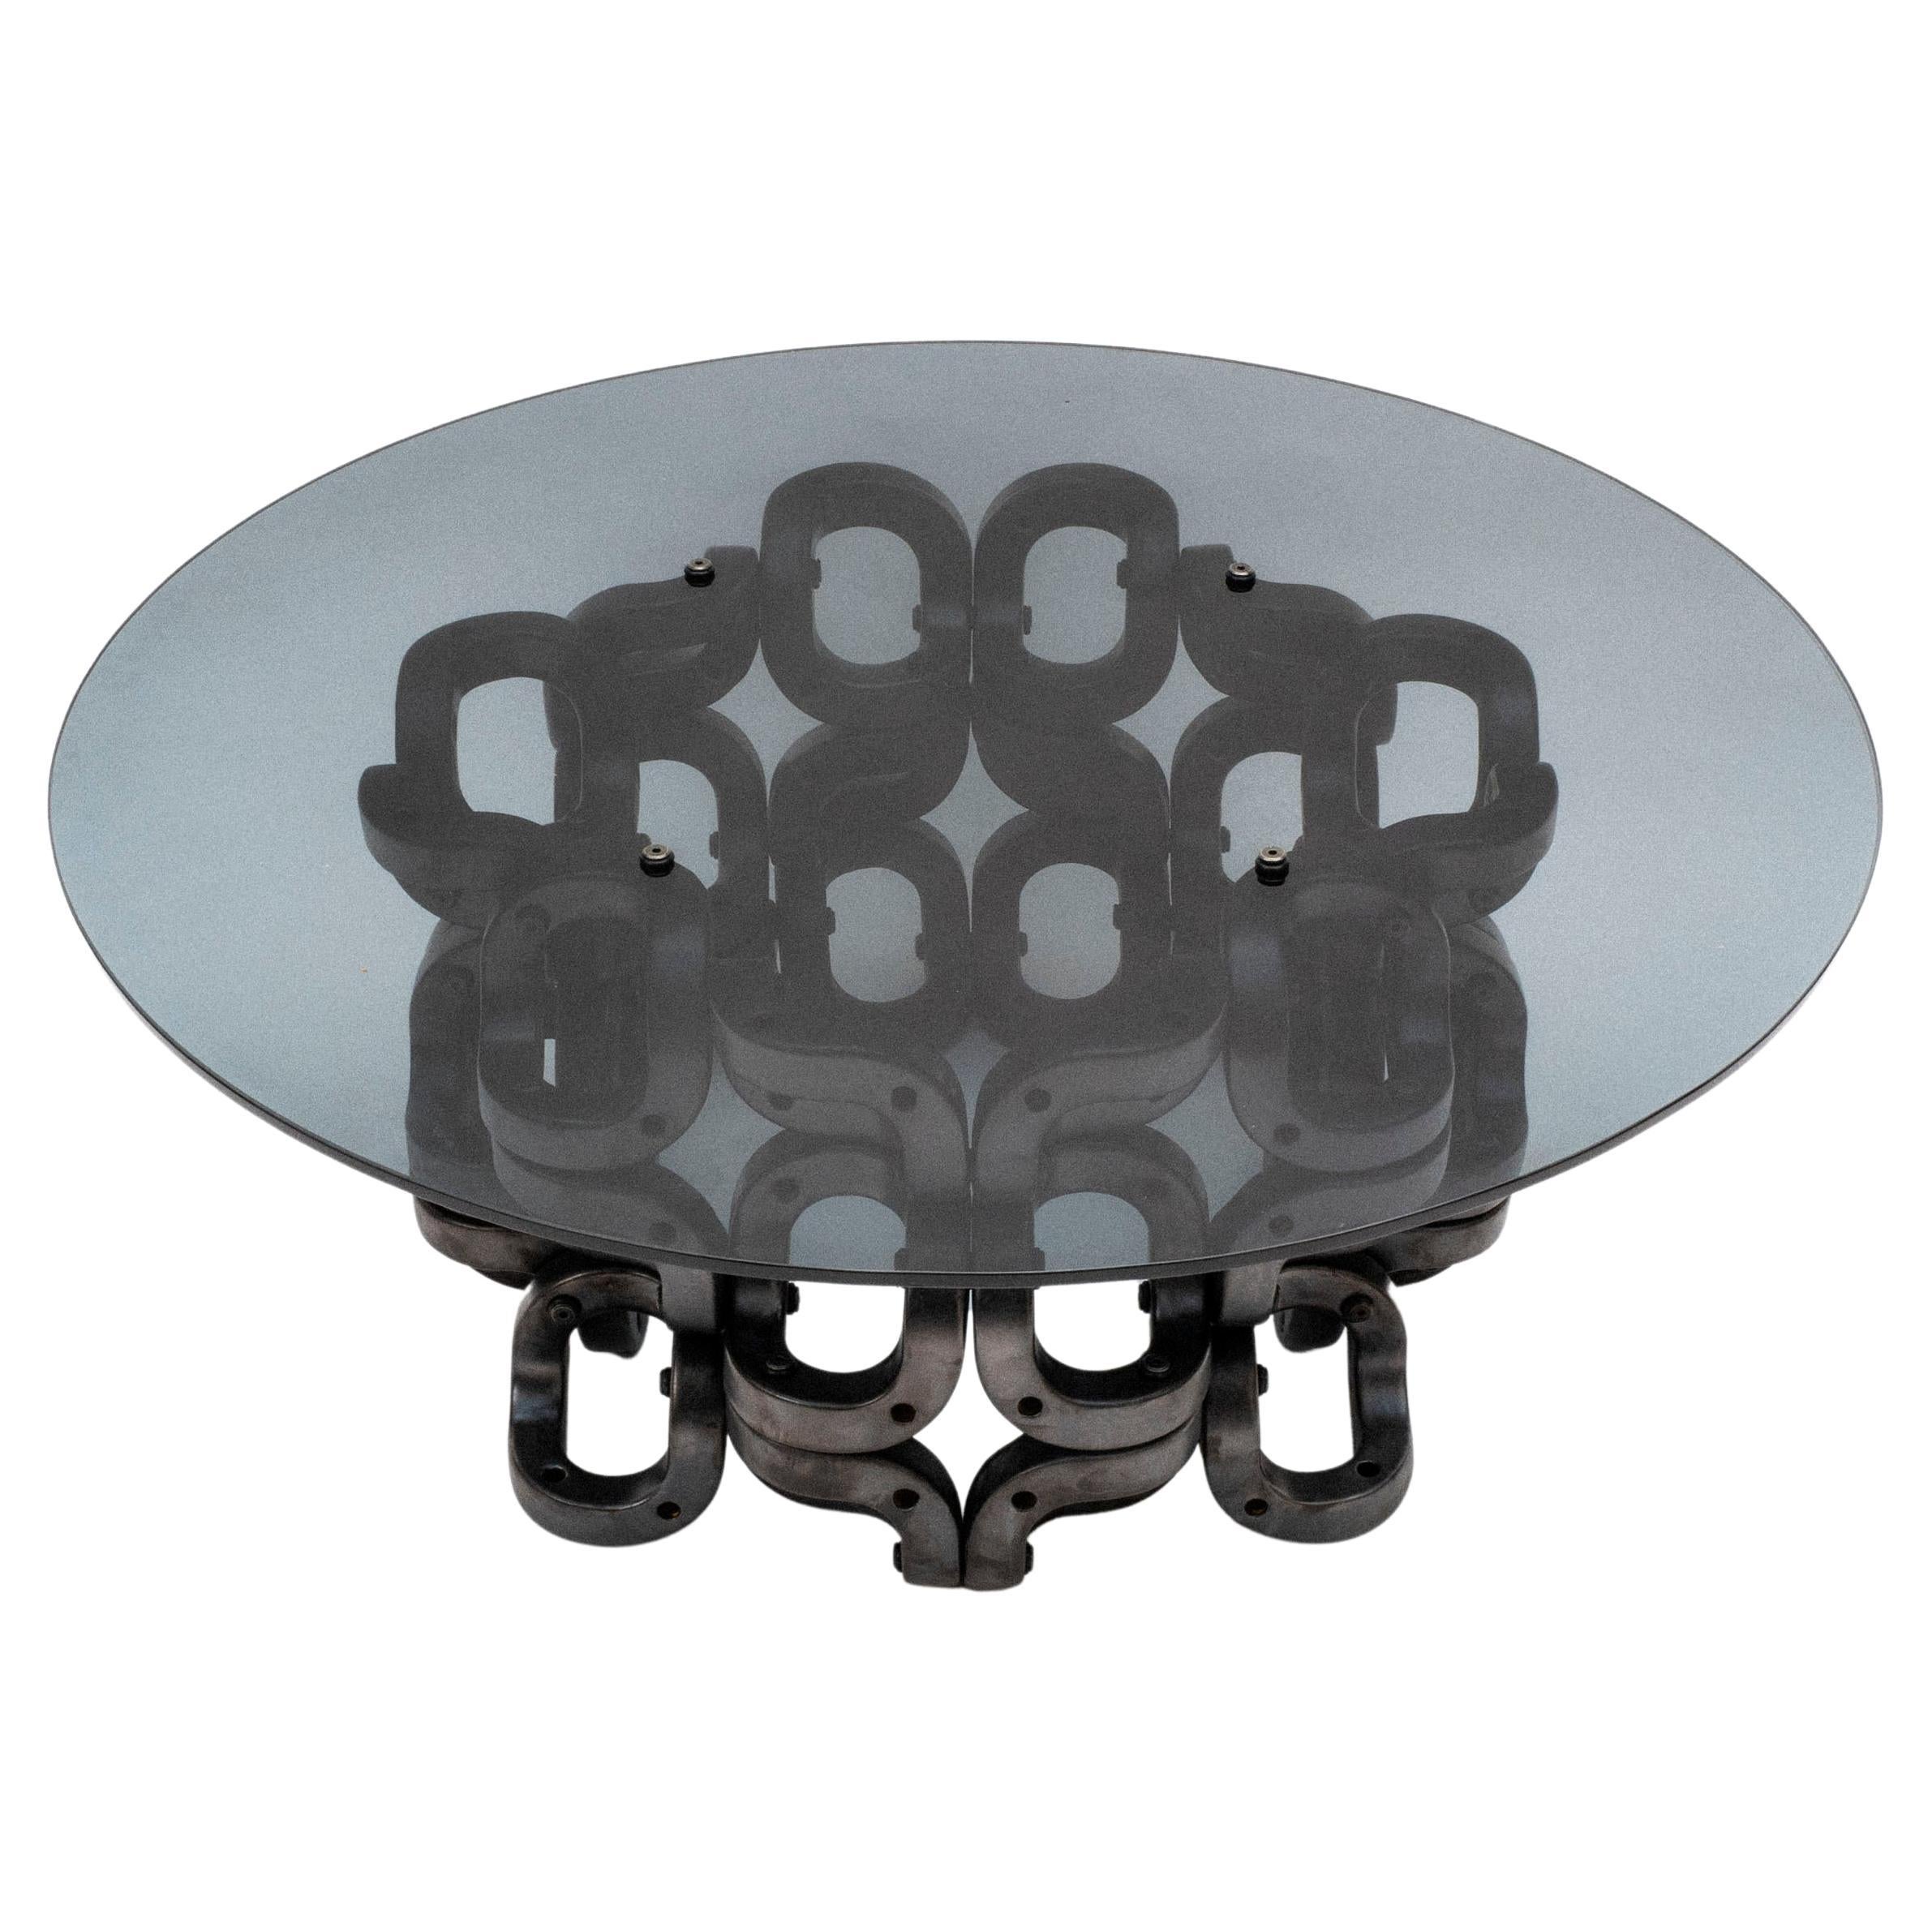 Laila; Modular Geometric Contemporary Ceramic and Glass Table by Pedro Cerisola